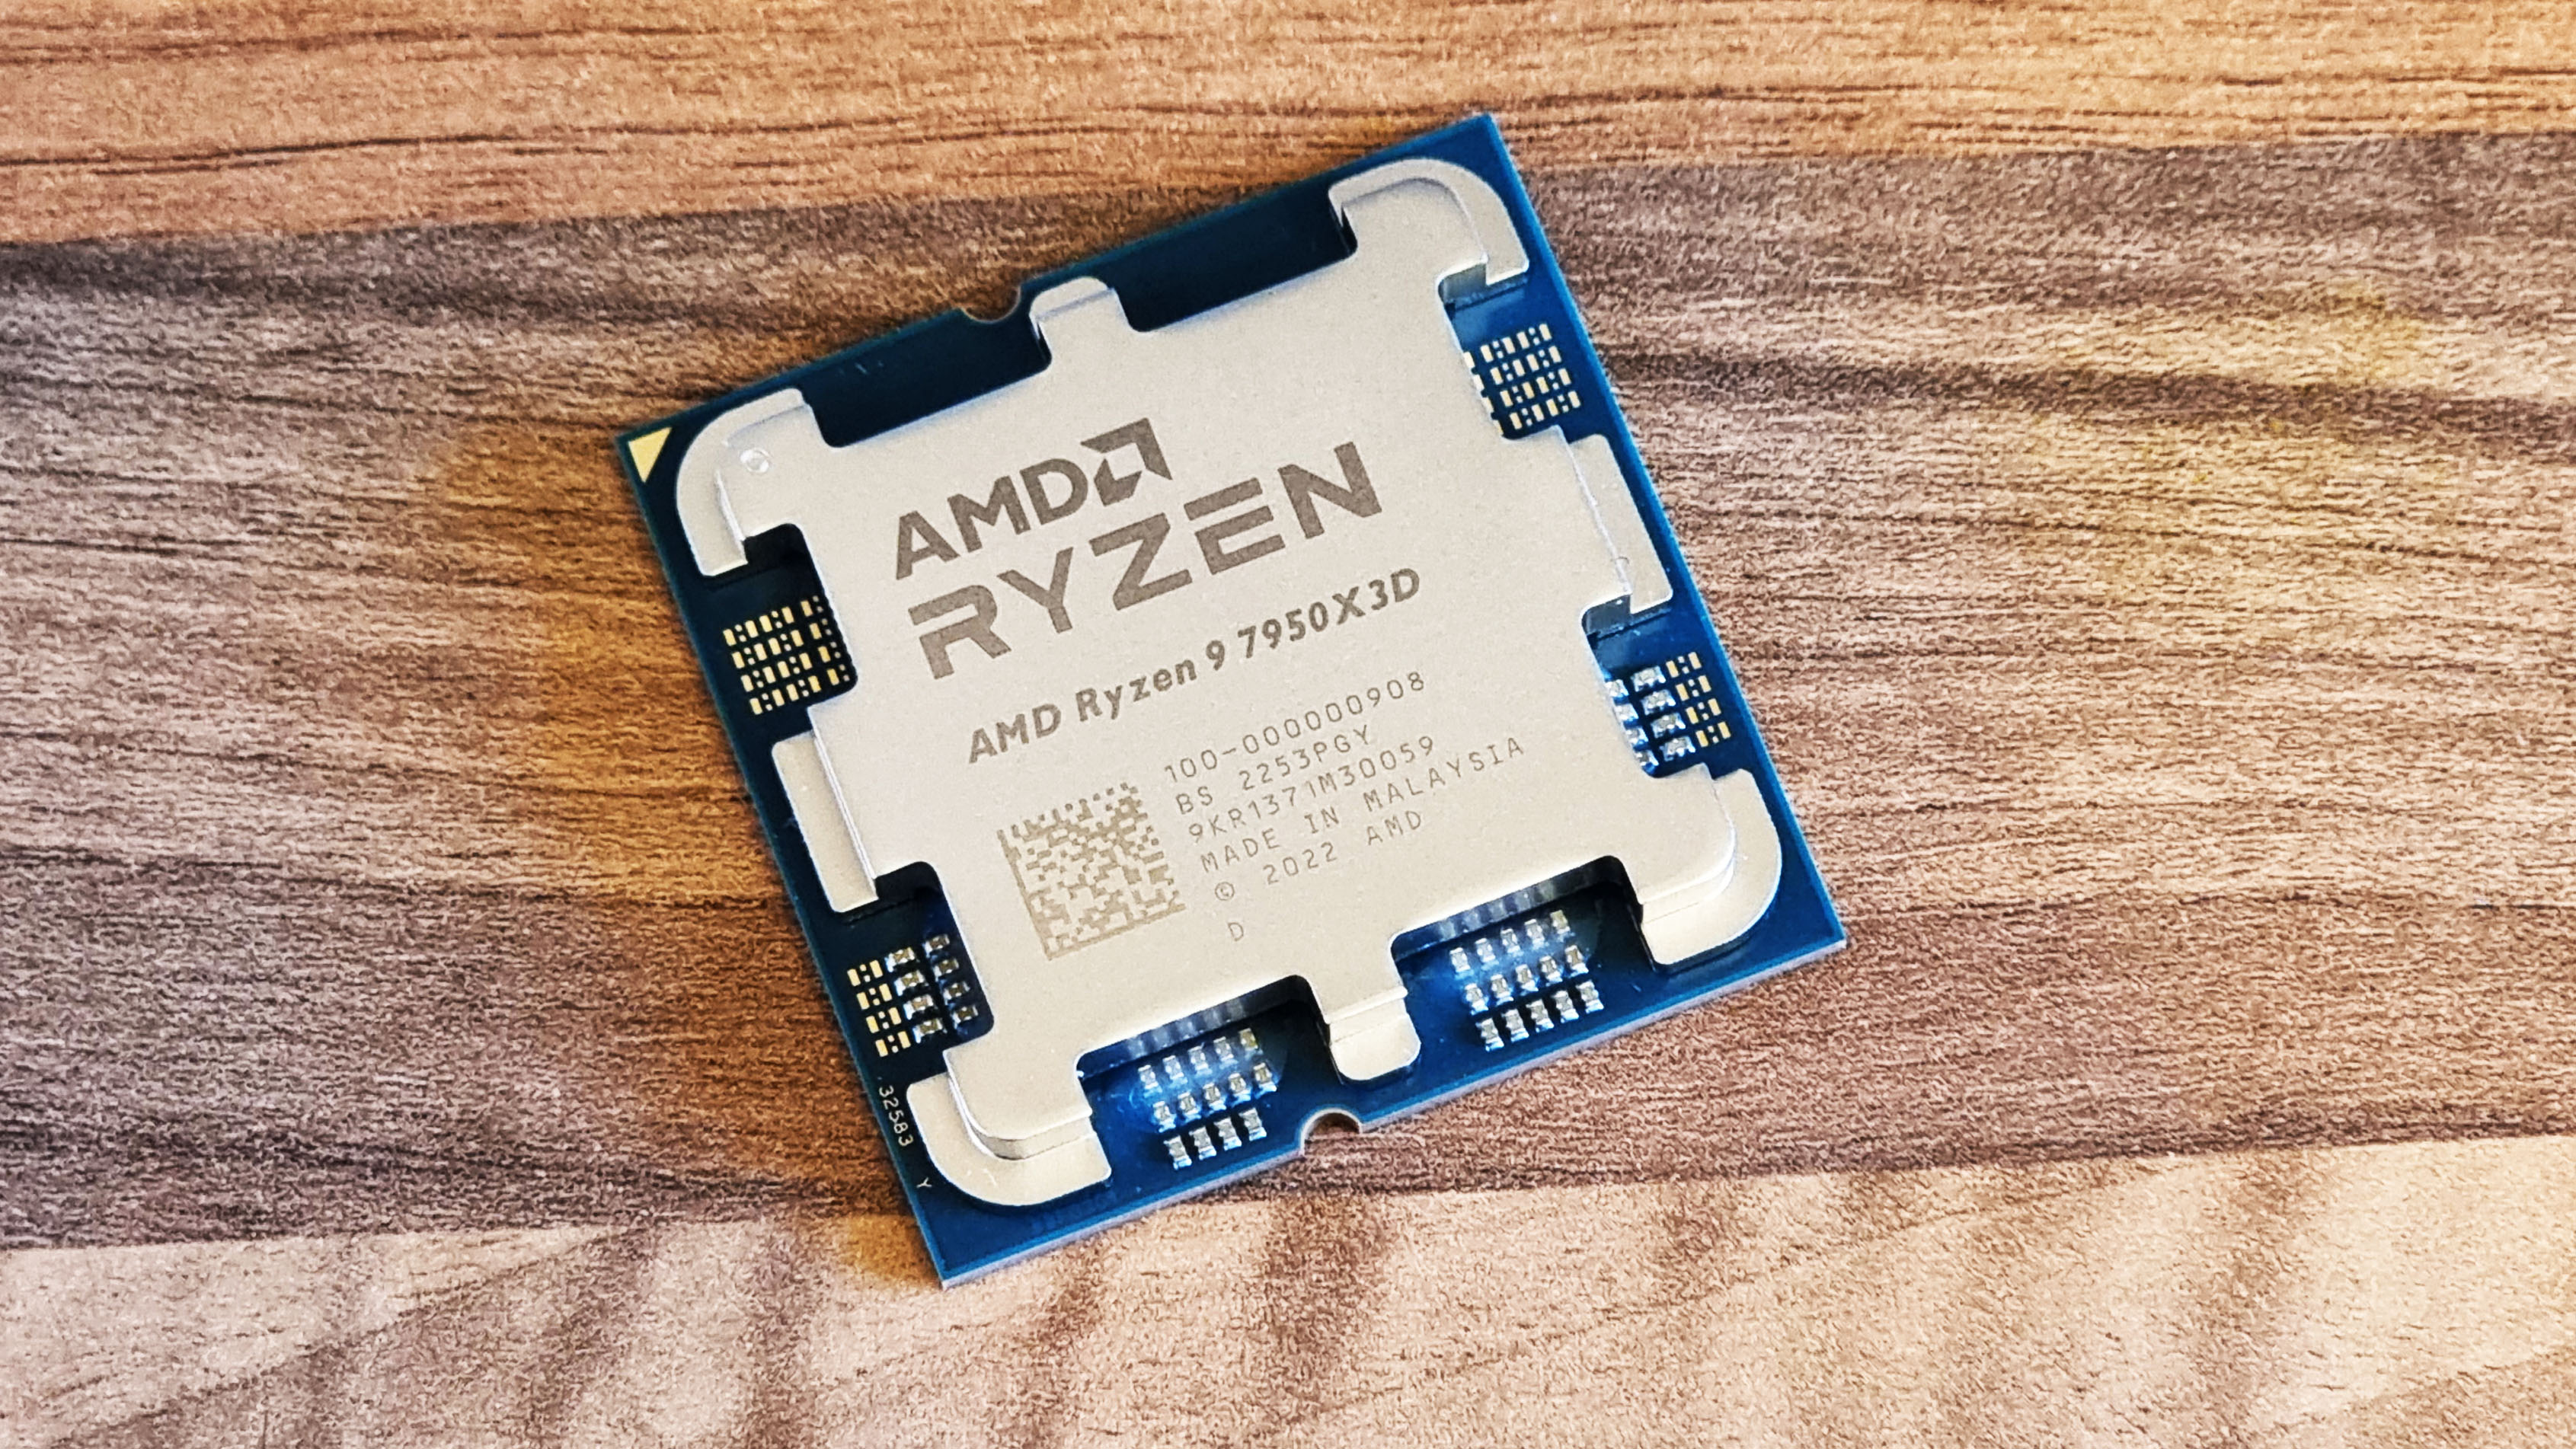 AMD Ryzen 5900X Claimed World's Best Gaming CPU - SlashGear